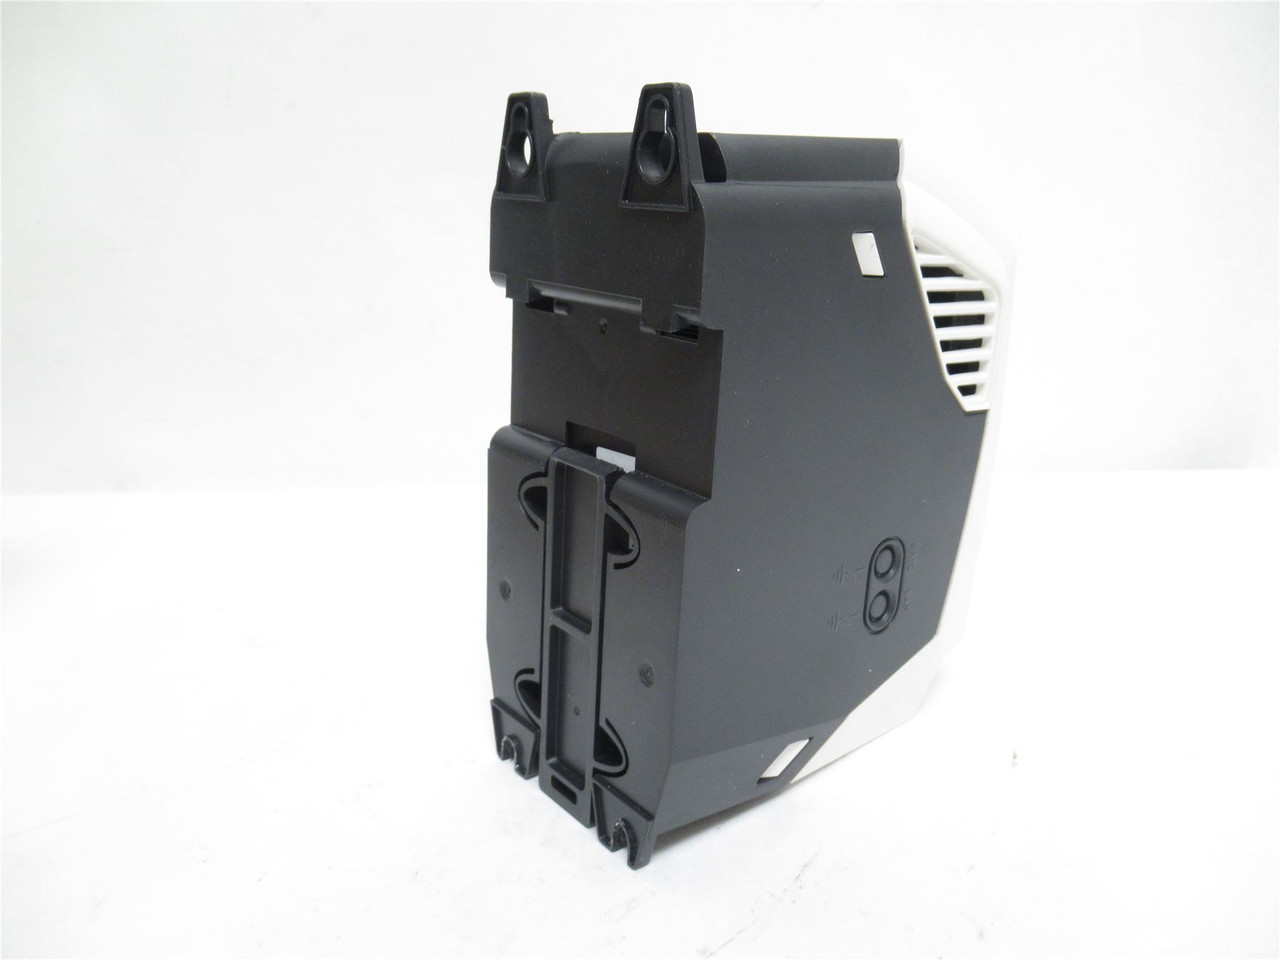 Bardac E3-140022-3012; AC Drive; 1HP 380-480VAC; 4A; 3Phase